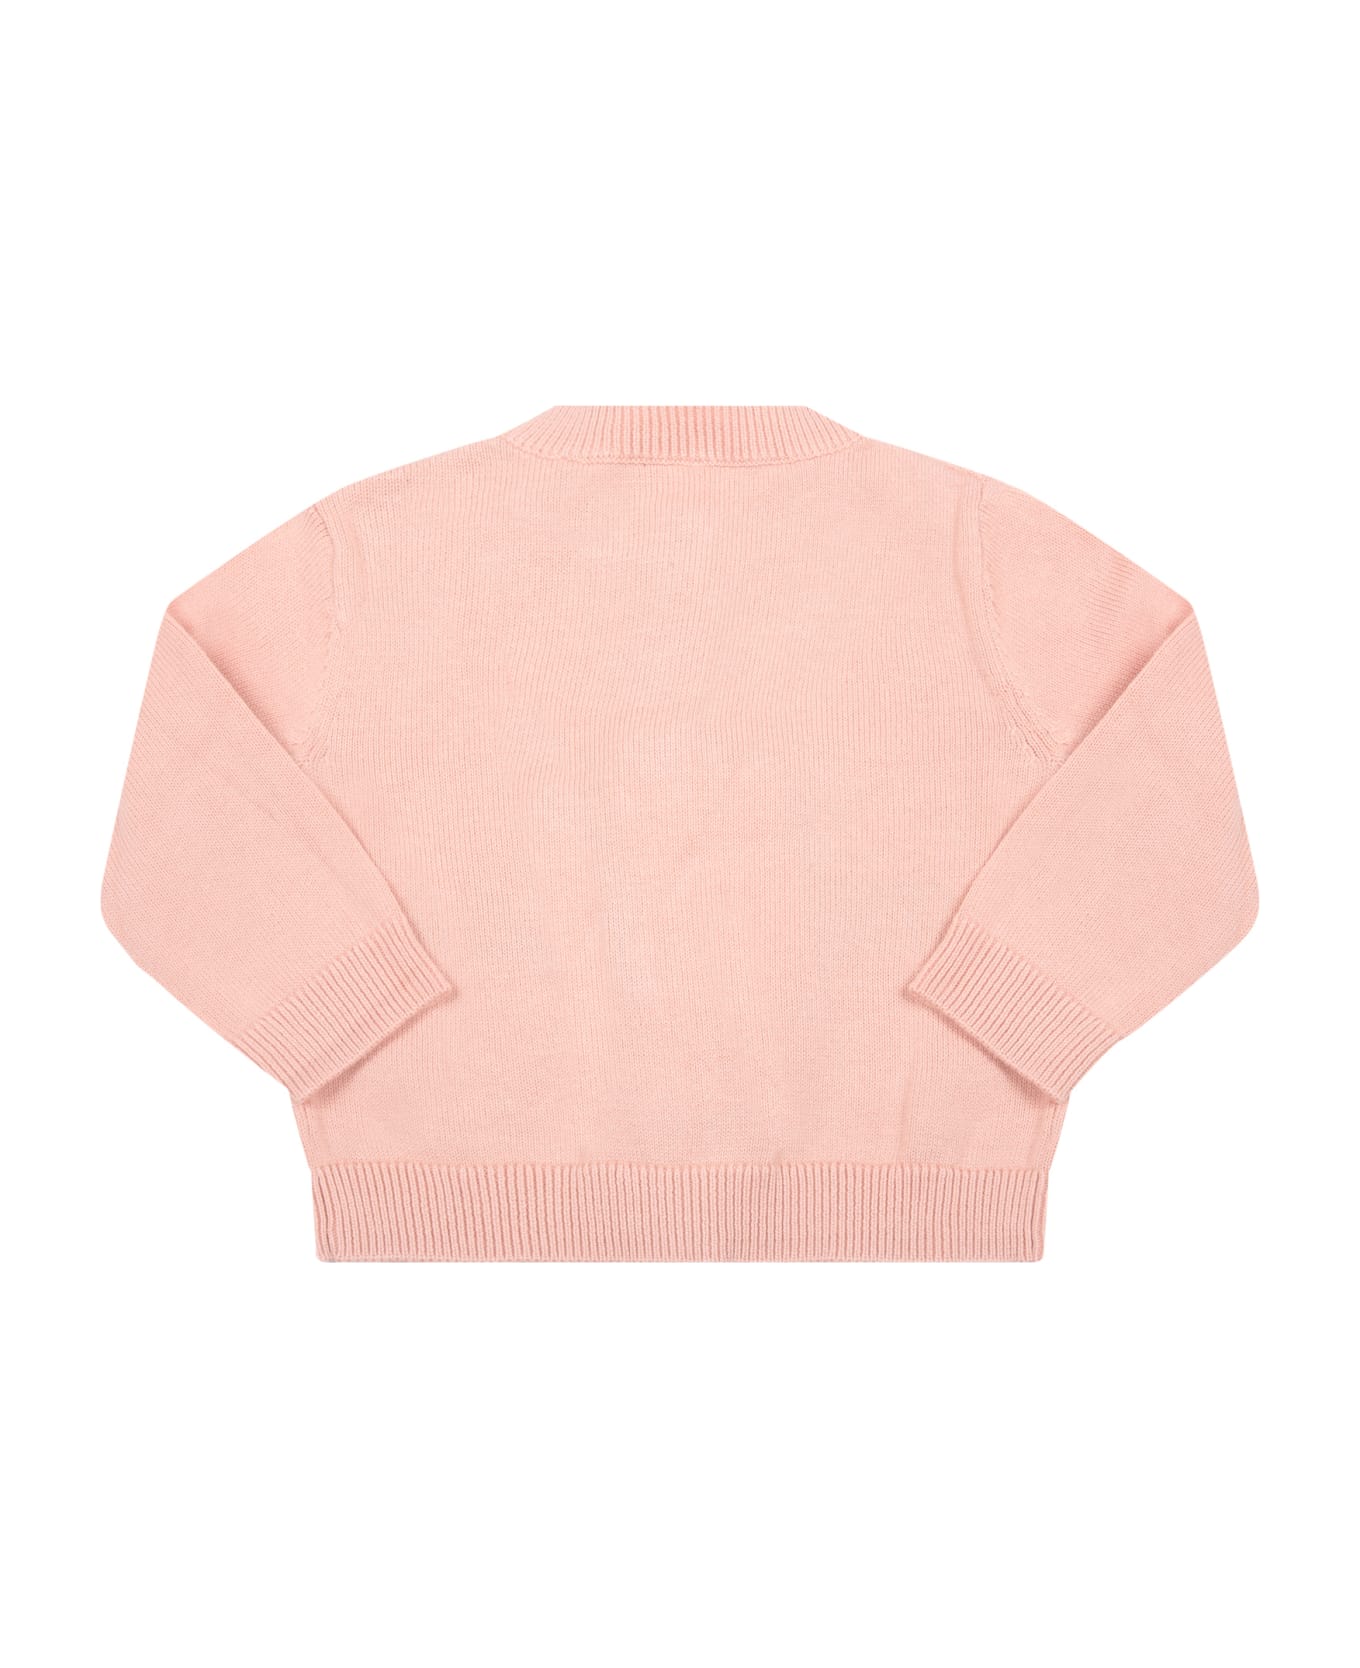 Stella McCartney Kids Pink Cardigan For Baby Girl - Rosa